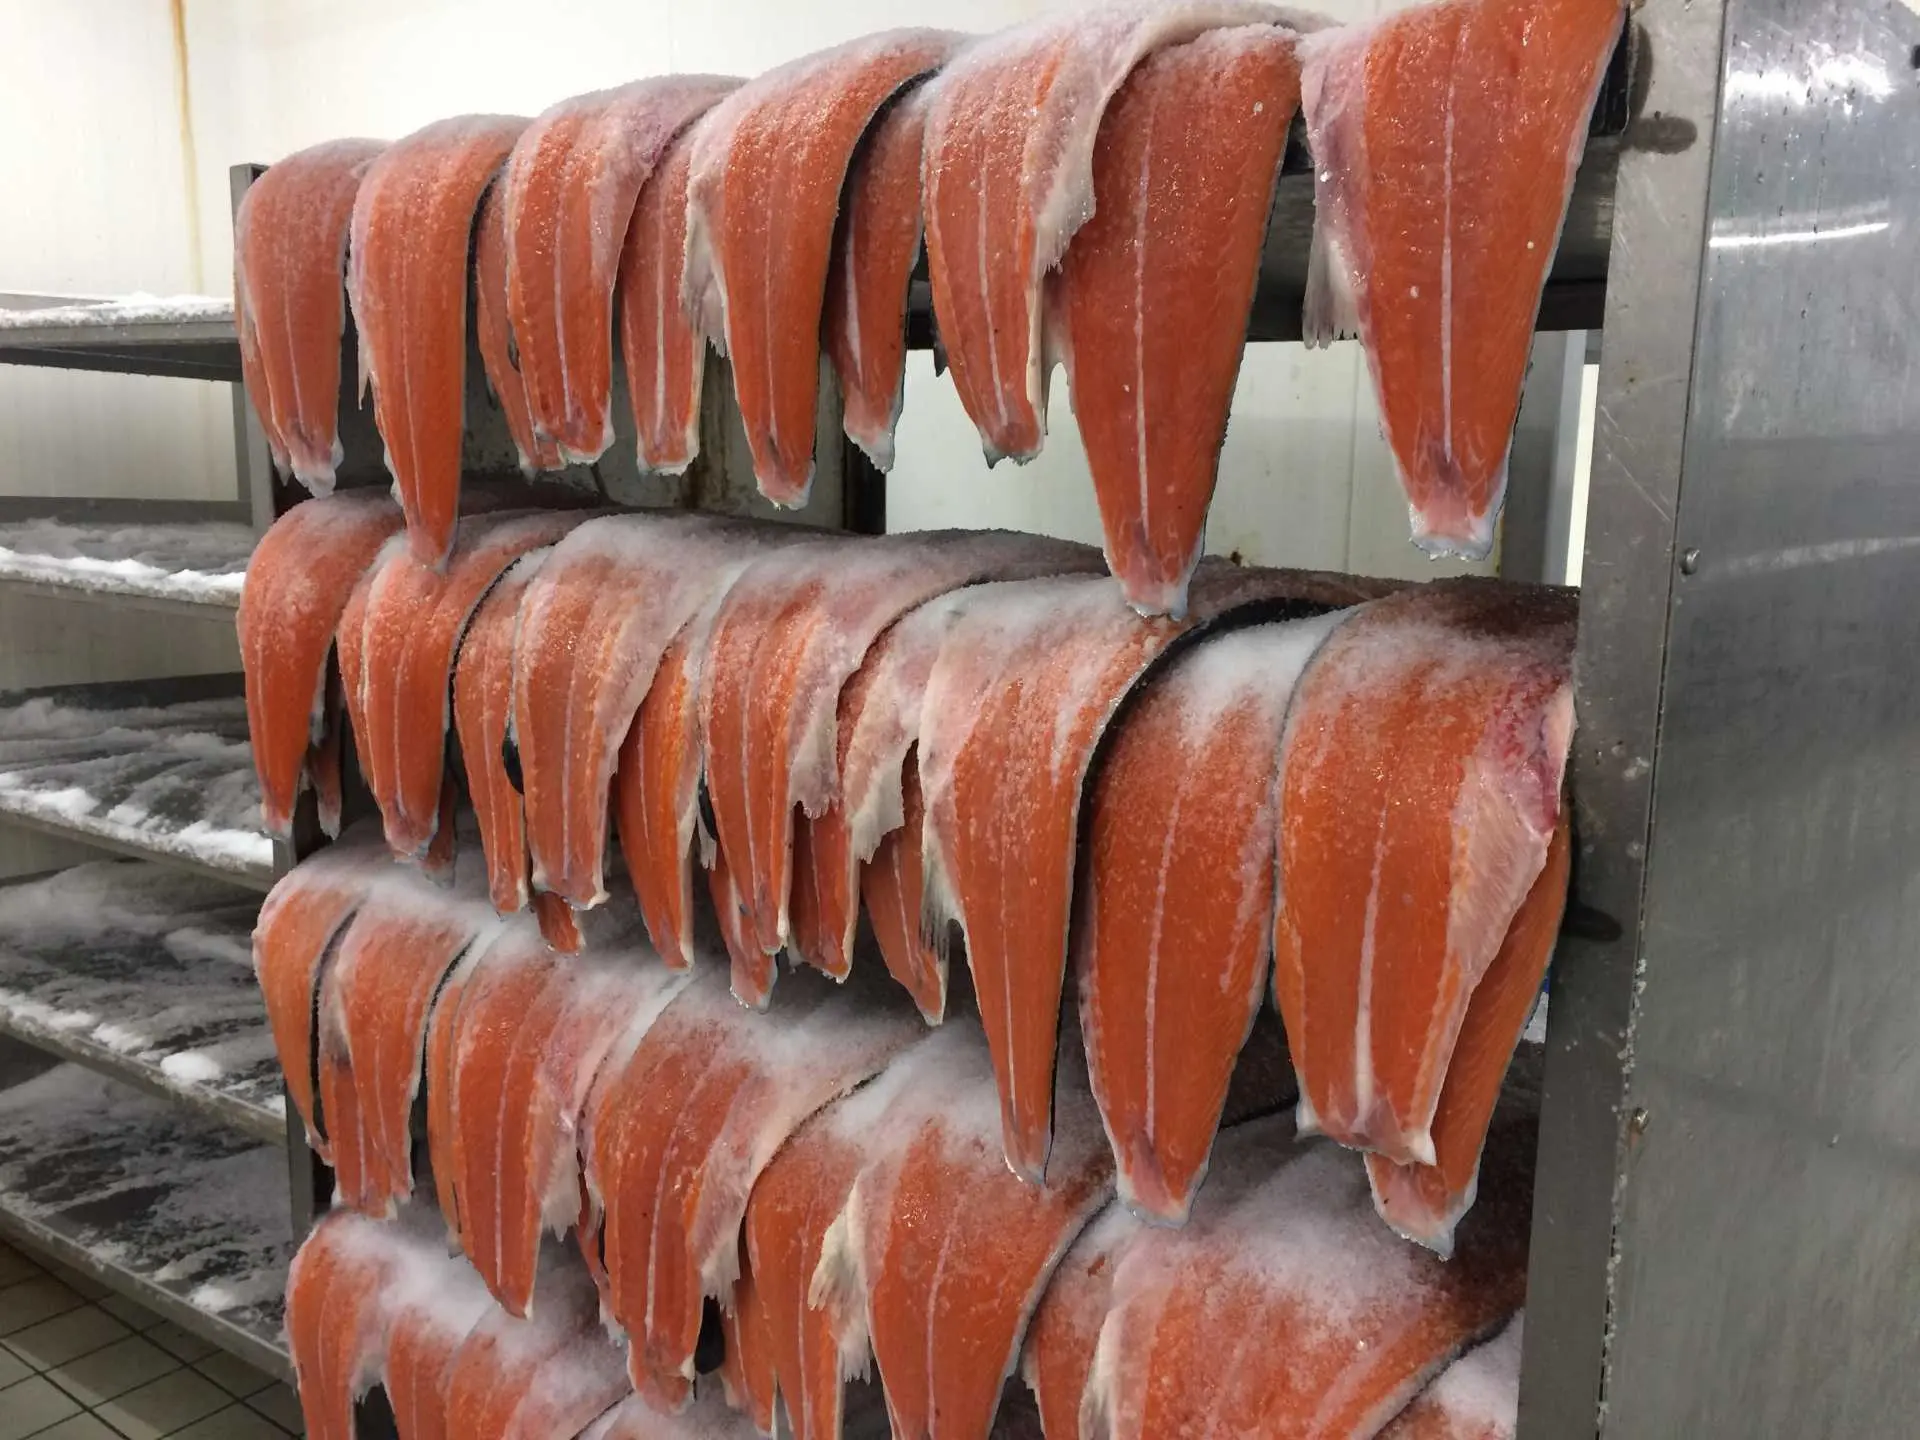 cold smoked salmon process - Is cold smoked salmon processed food